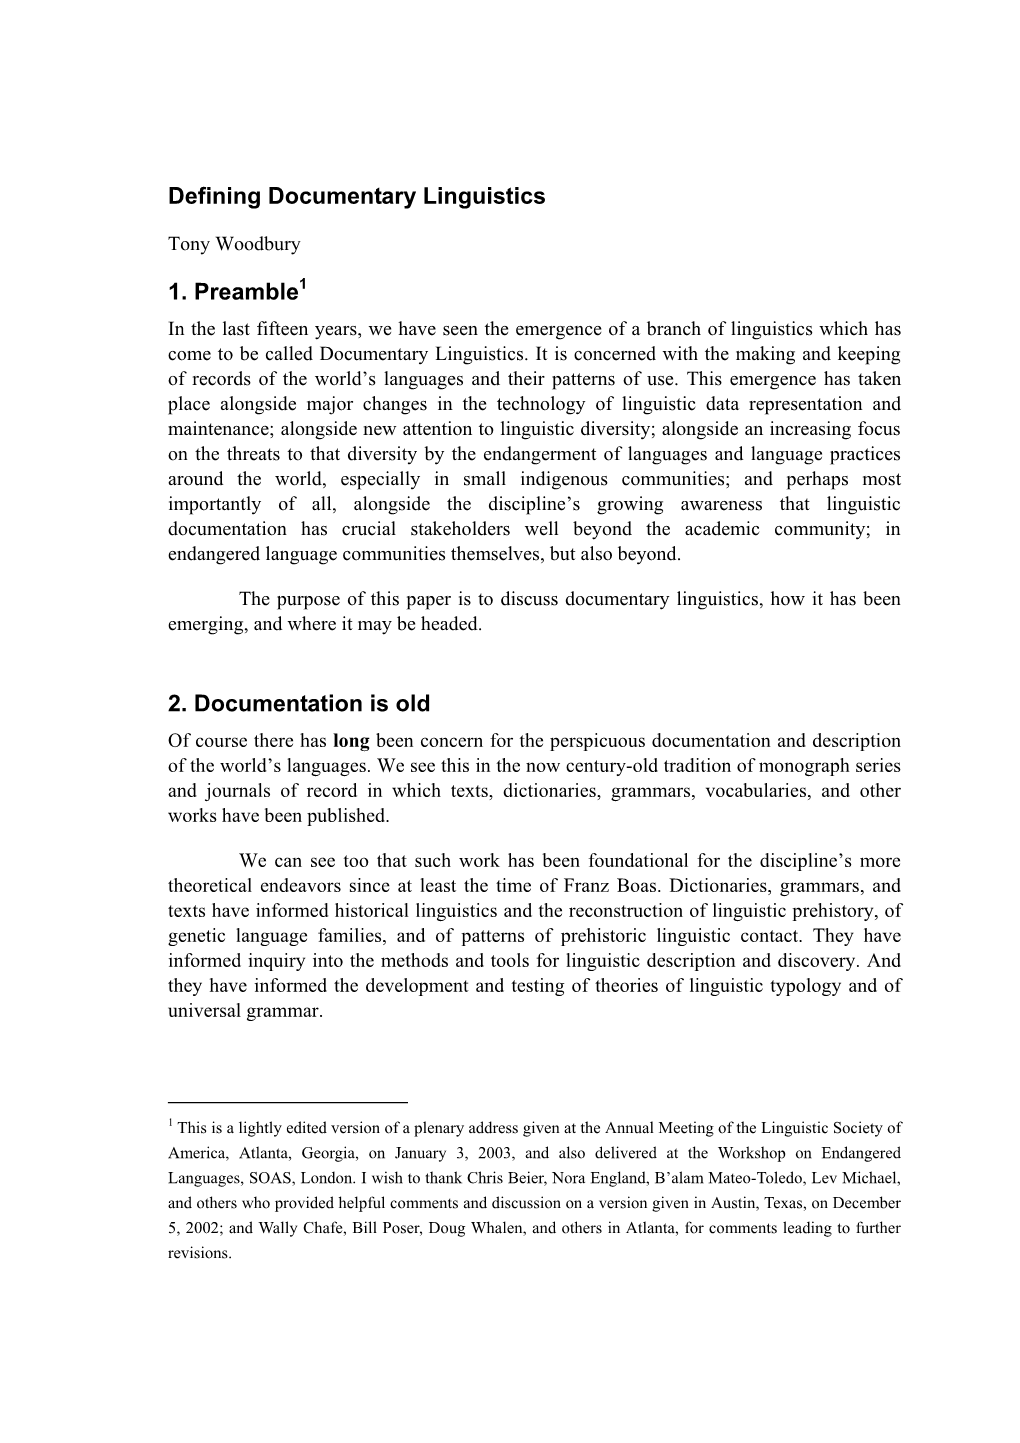 Defining Documentary Linguistics 1. Preamble1 2. Documentation Is